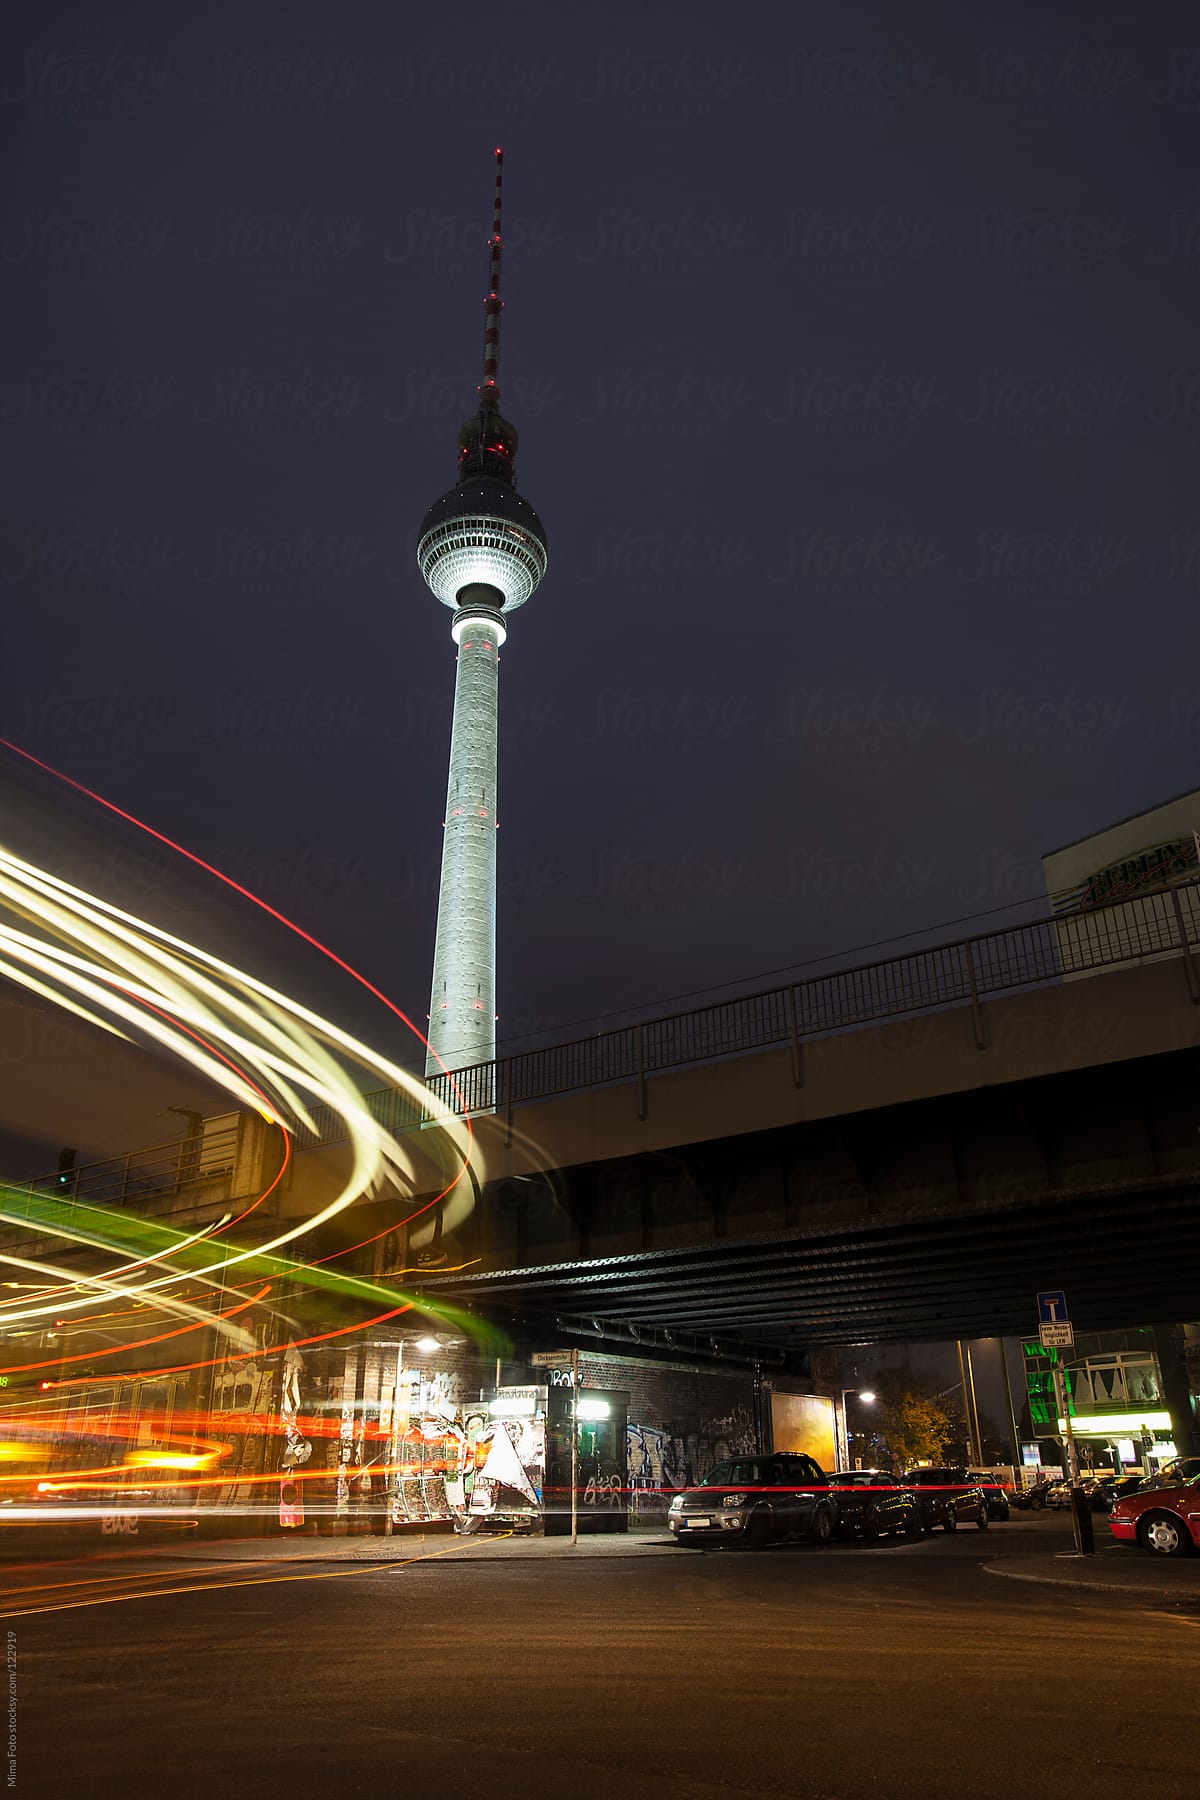 Trails of traffic lights, Alexanderplatz Berlin, Fernsehturm at night